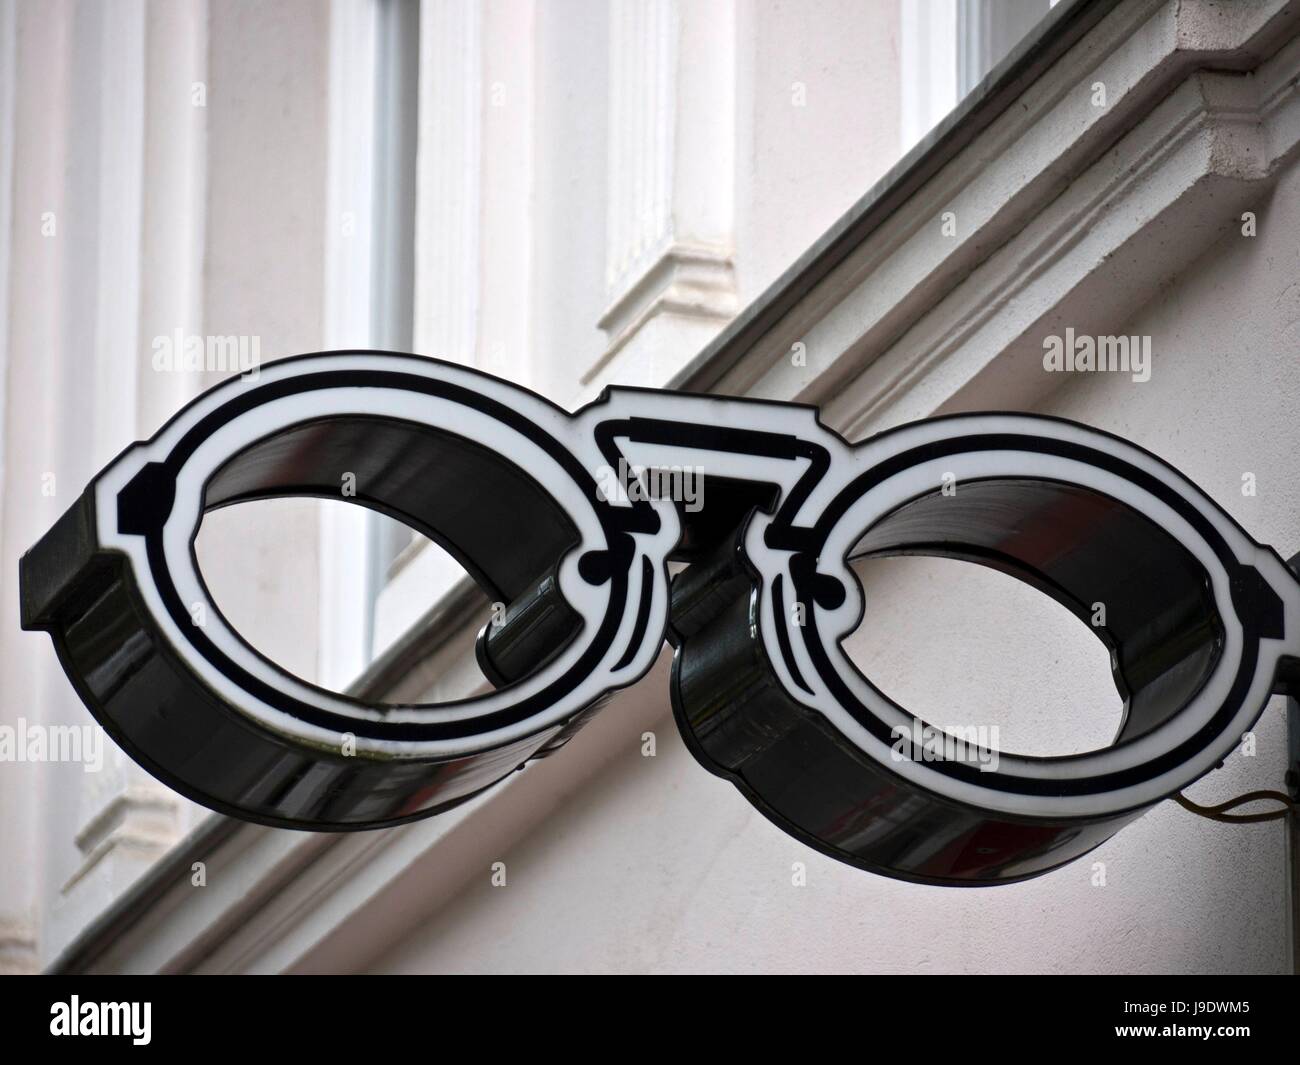 object, spectacles, glasses, eyeglasses, optician, implement, eyeglass, Stock Photo